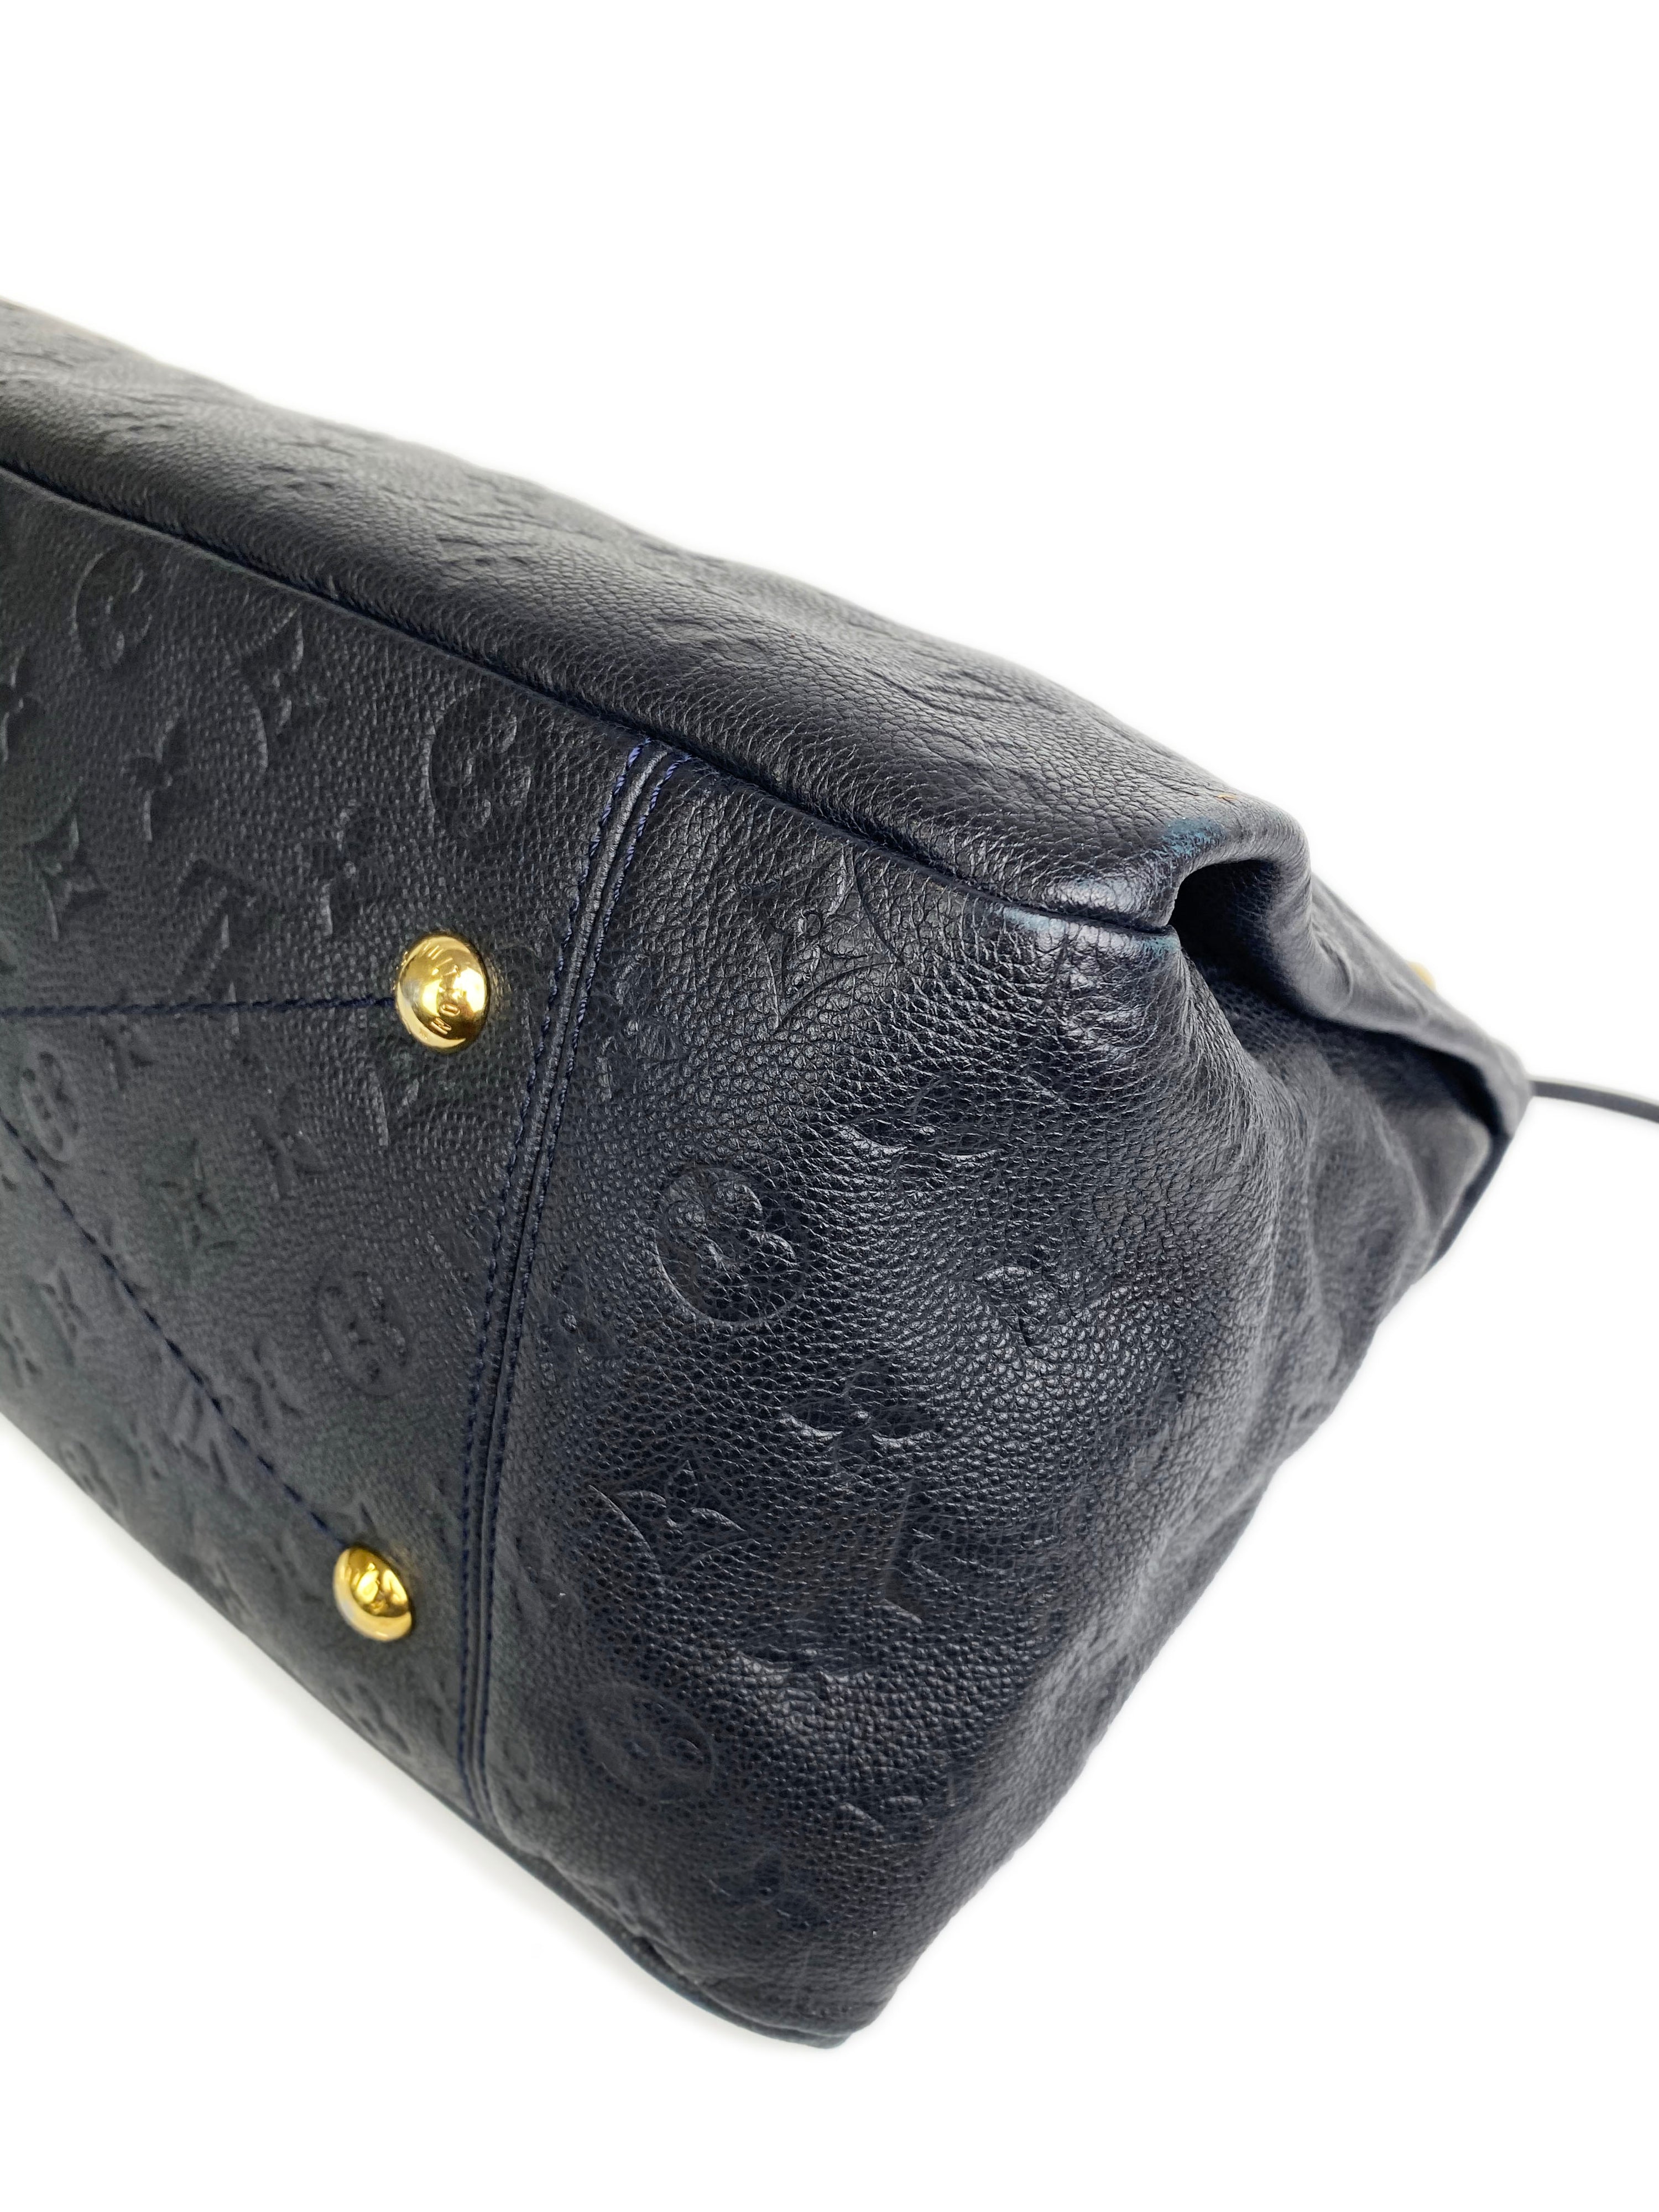 Louis Vuitton Black Artsy MM Bag